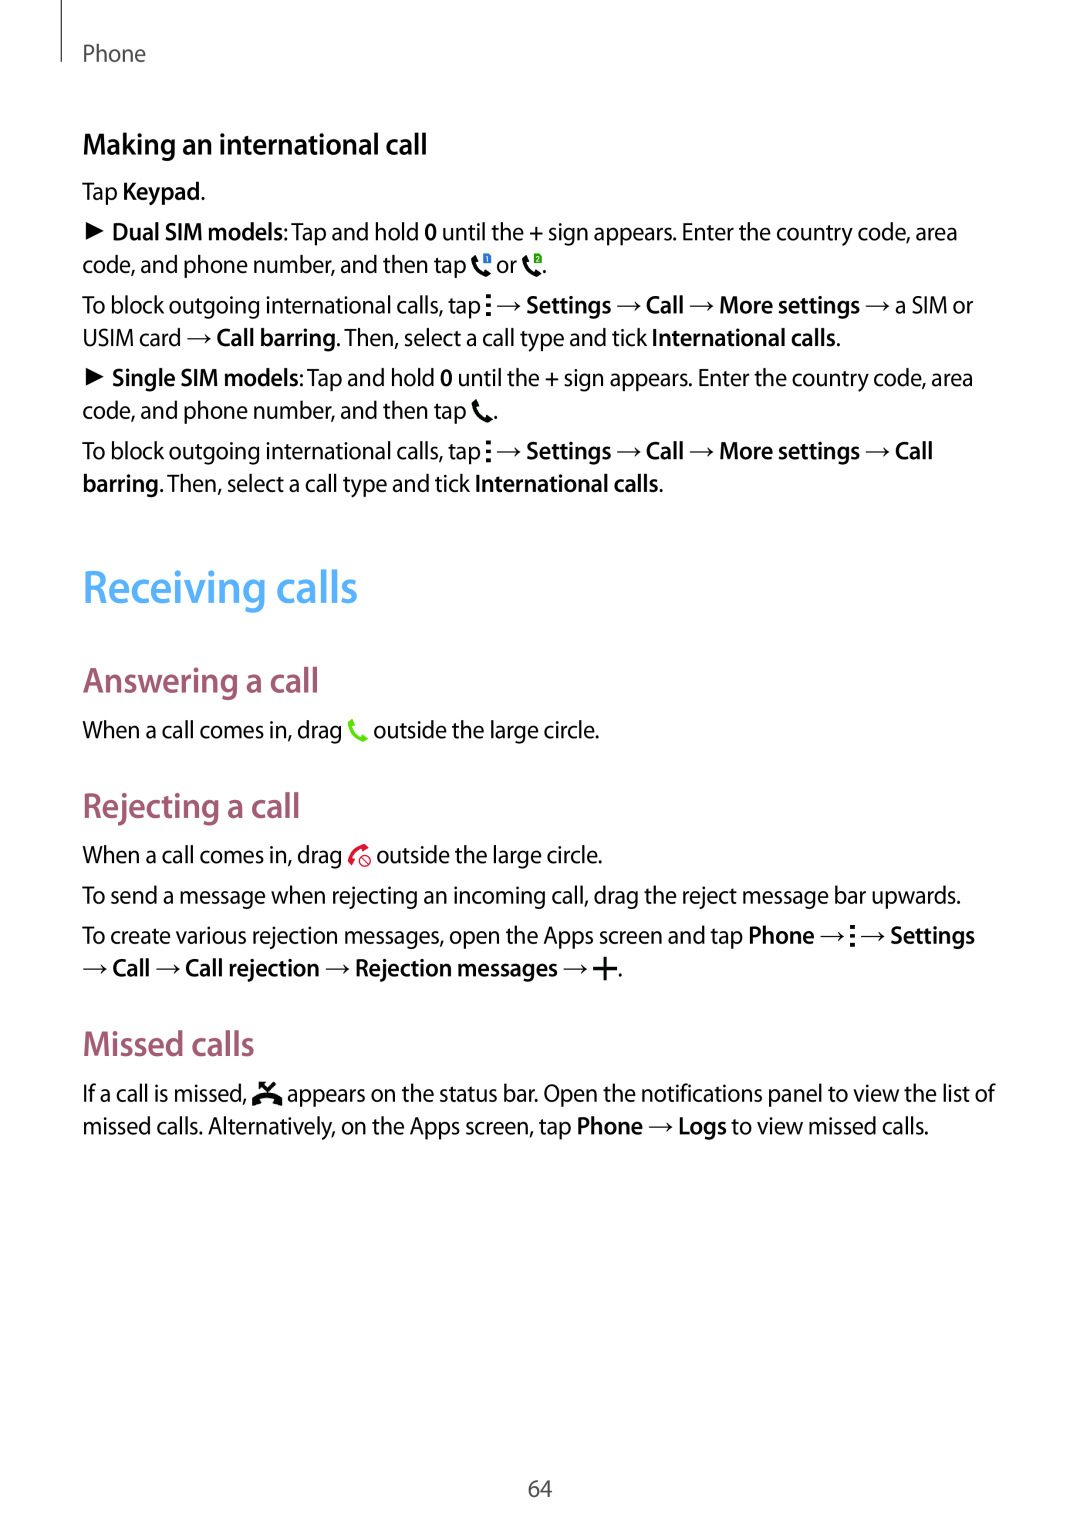 Samsung SM-A700FZDDKSA Receiving calls, Answering a call, Rejecting a call, Missed calls, Making an international call 